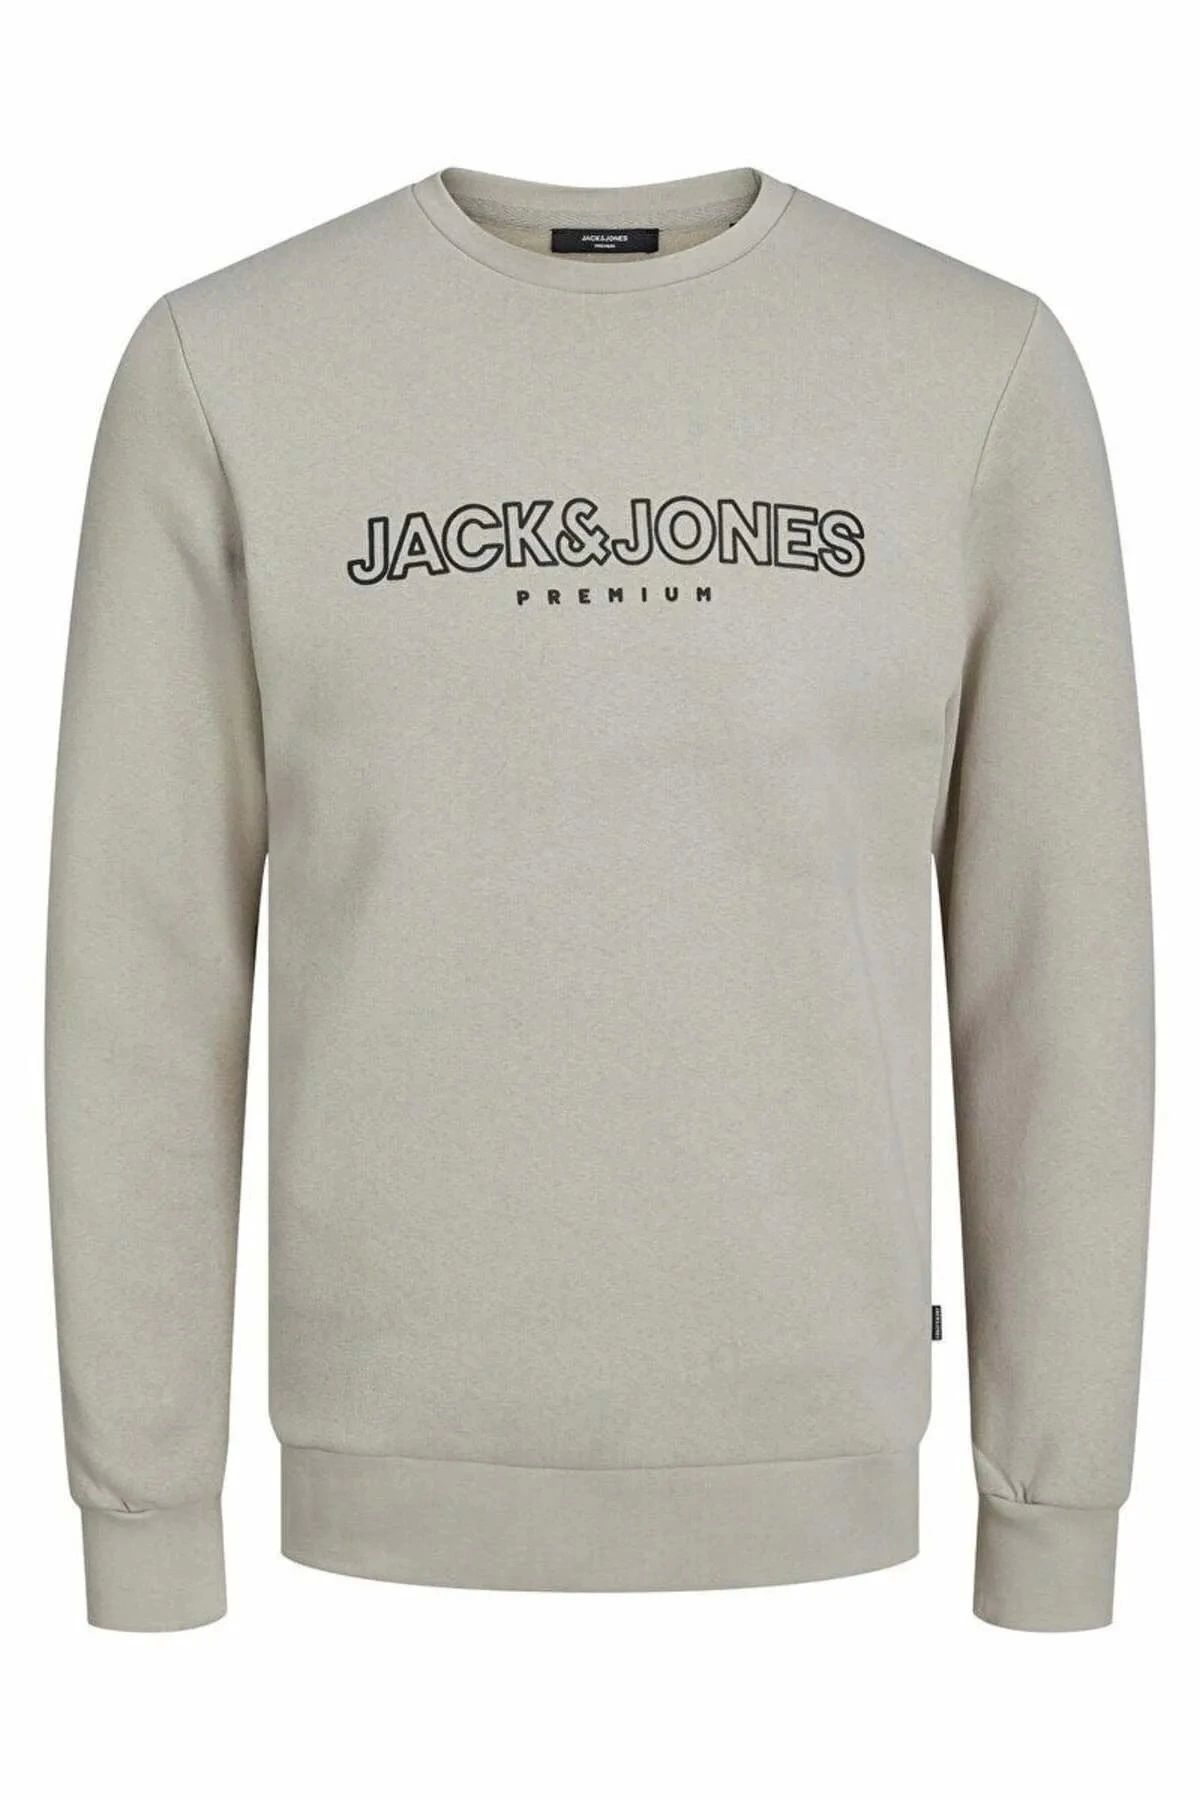 Jack & Jones Jack&jones 12245593 0 Yaka Erkek Sweat - Toprak